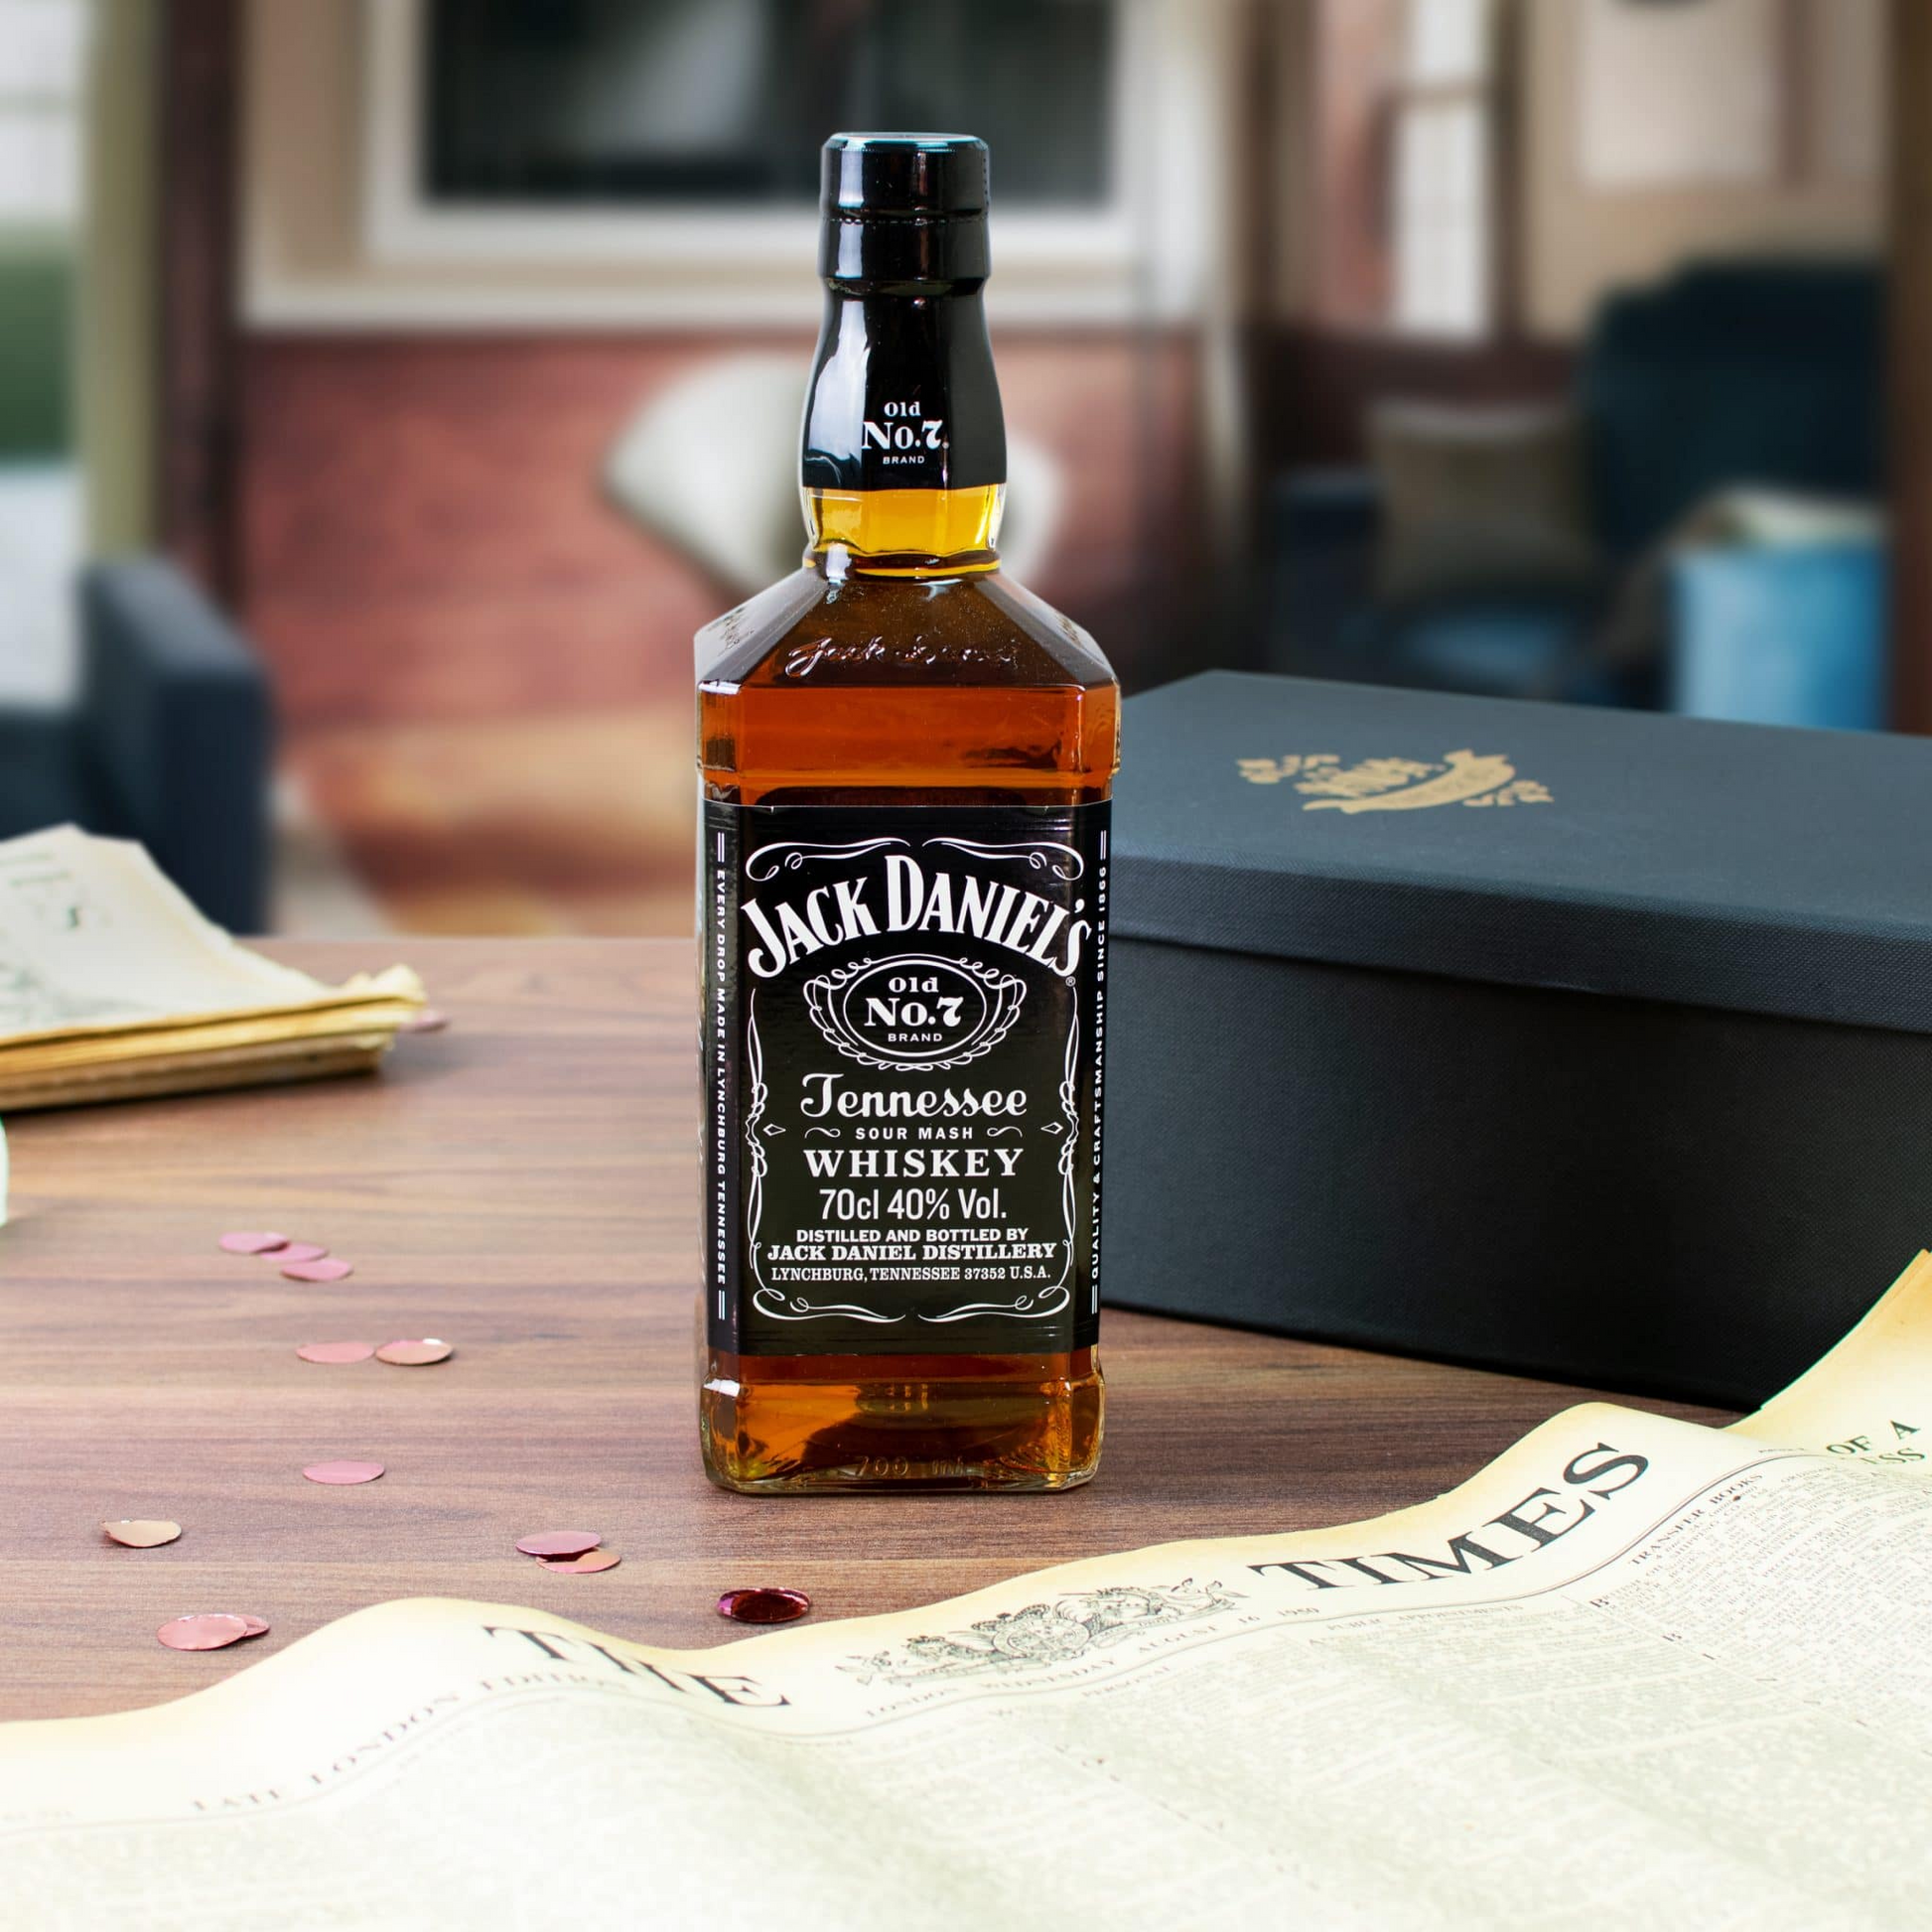 Jack Daniel’s Whiskey and Original Newspaper Set